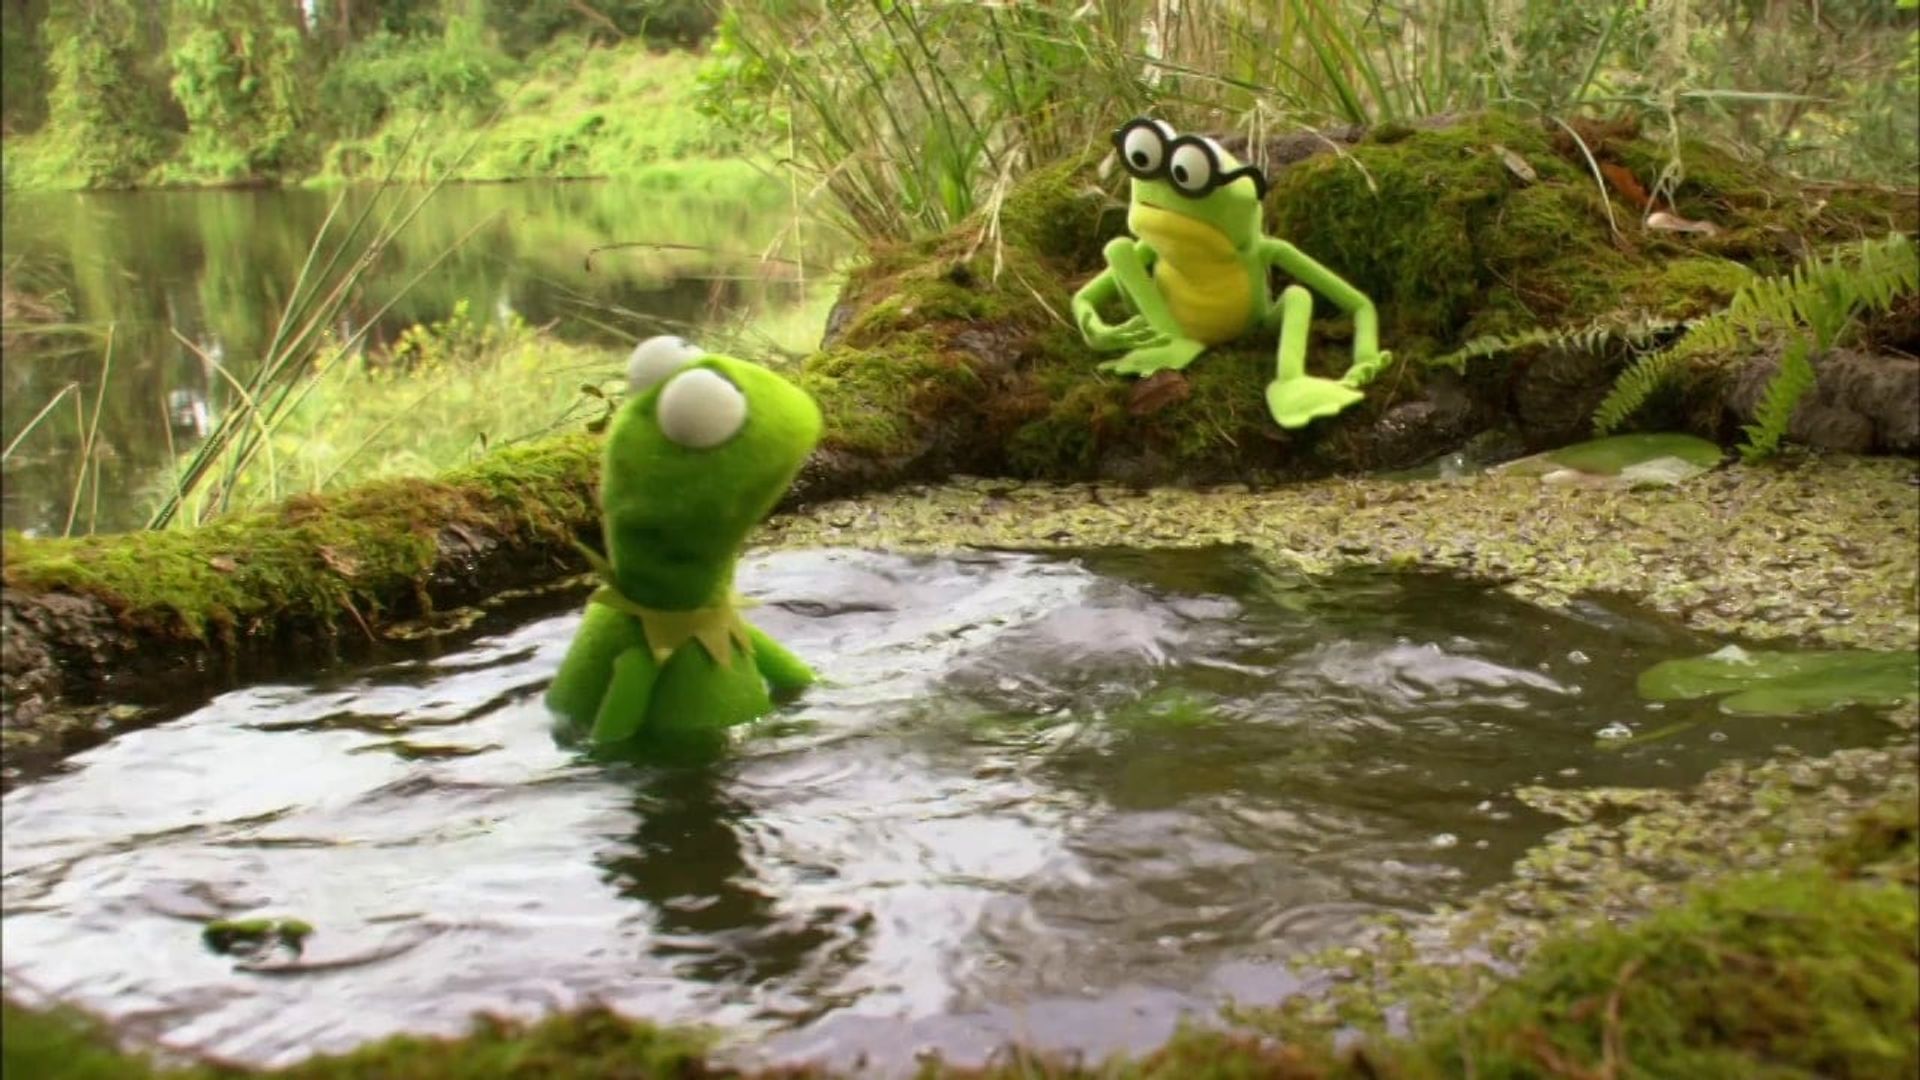 Kermit's Swamp Years background